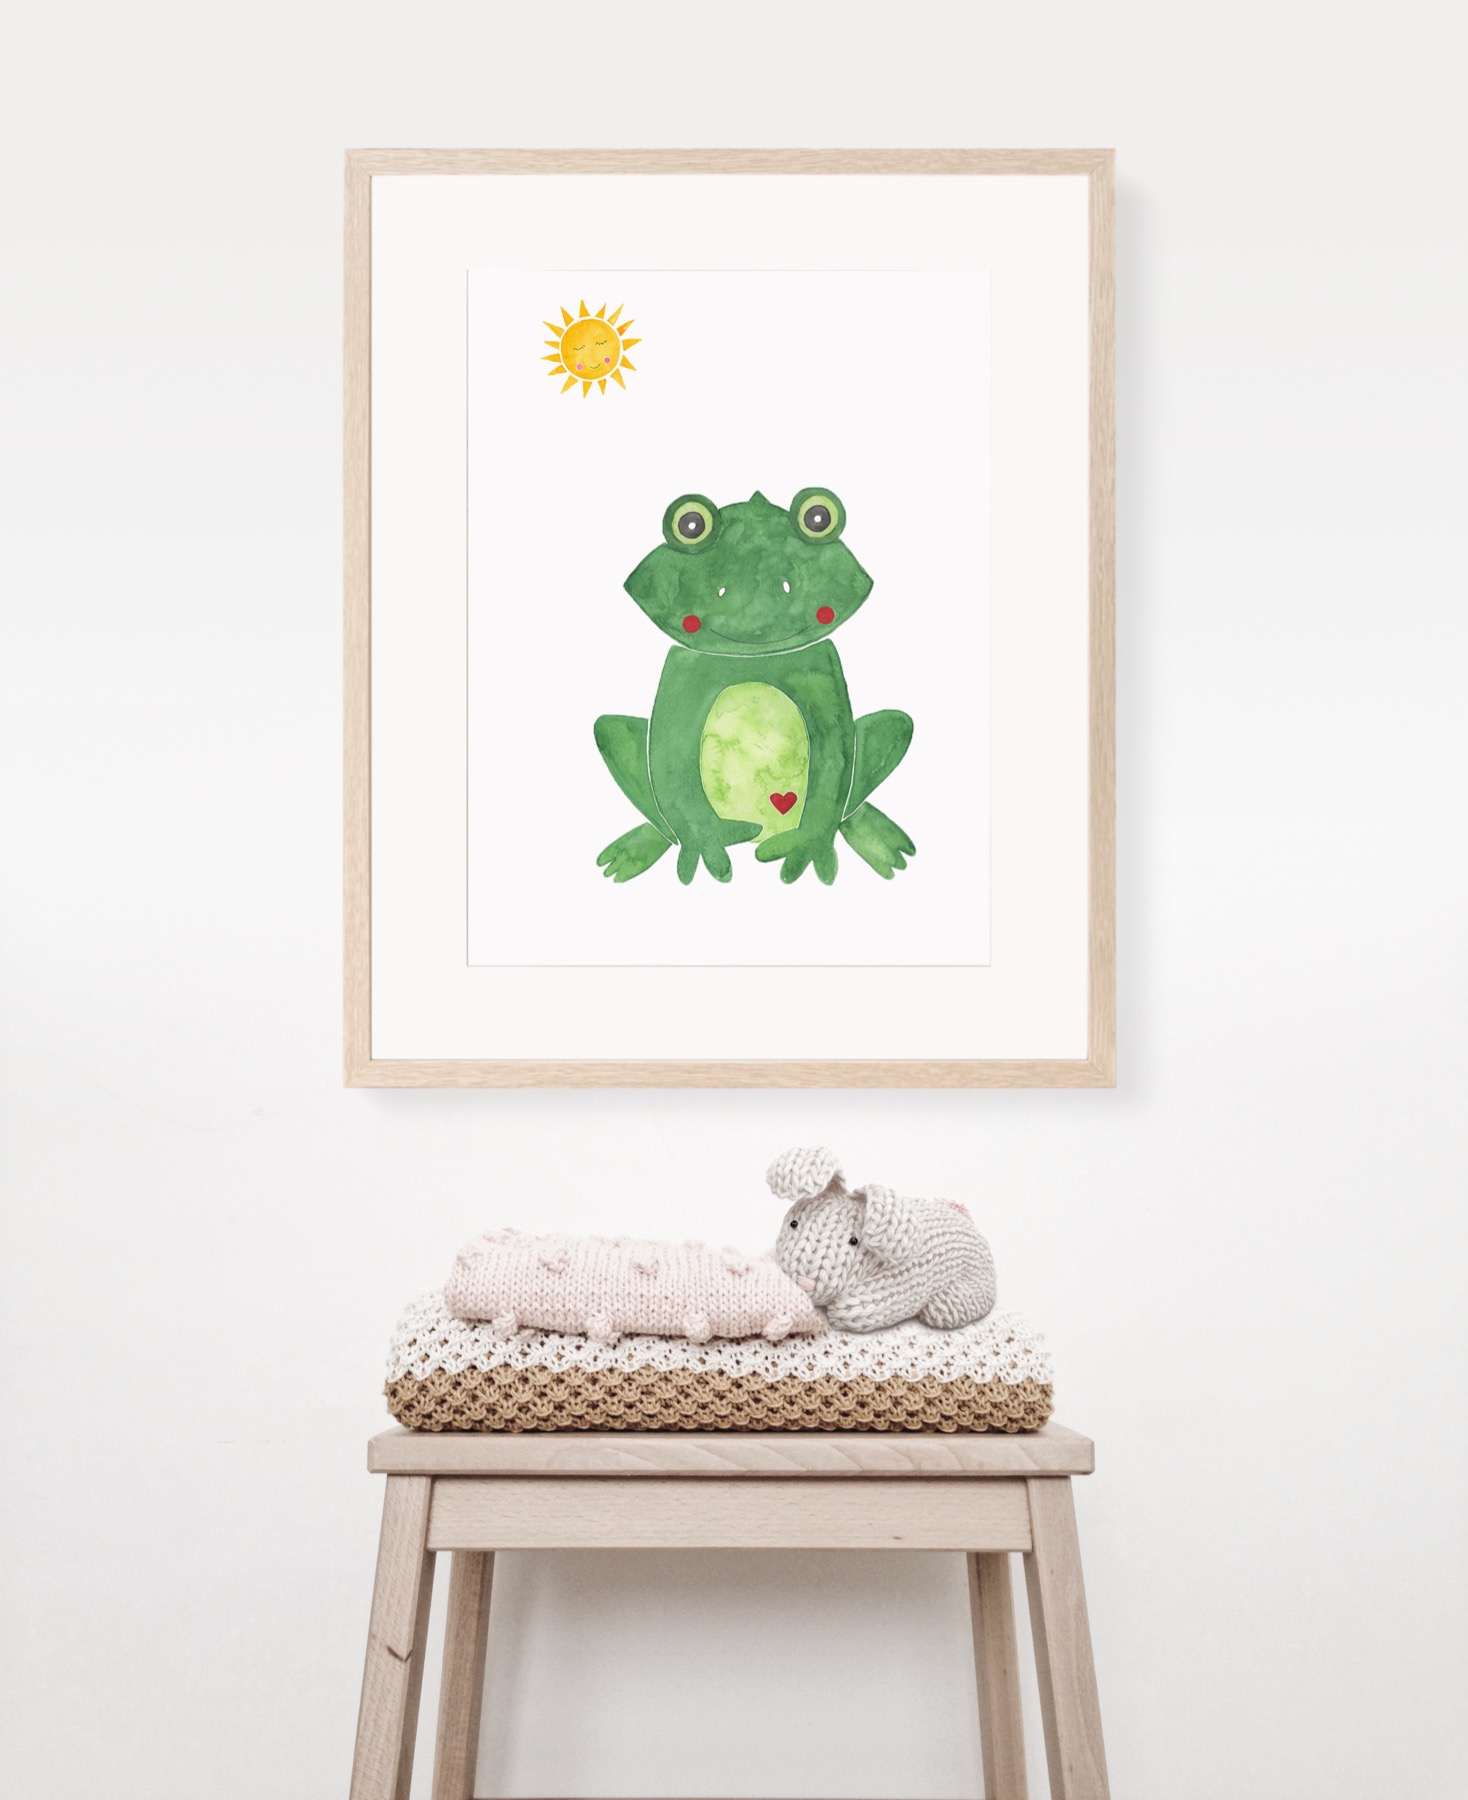 Kinderzimmer Poster Frosch 2